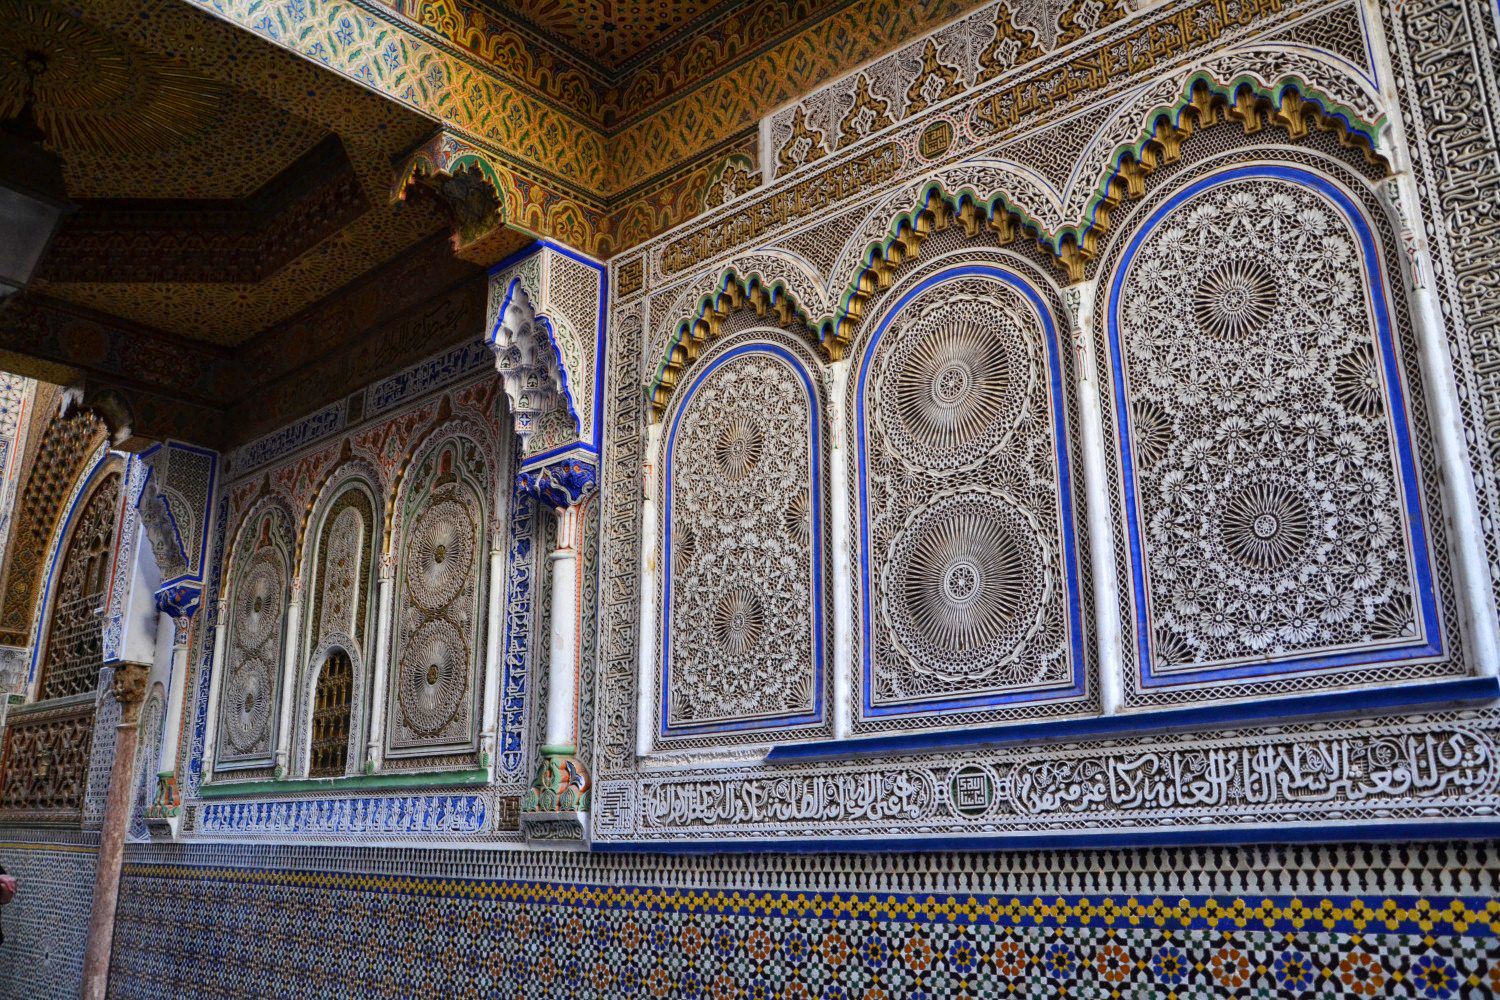 Maroko, od A do Z, blog po śląsku, bele kaj